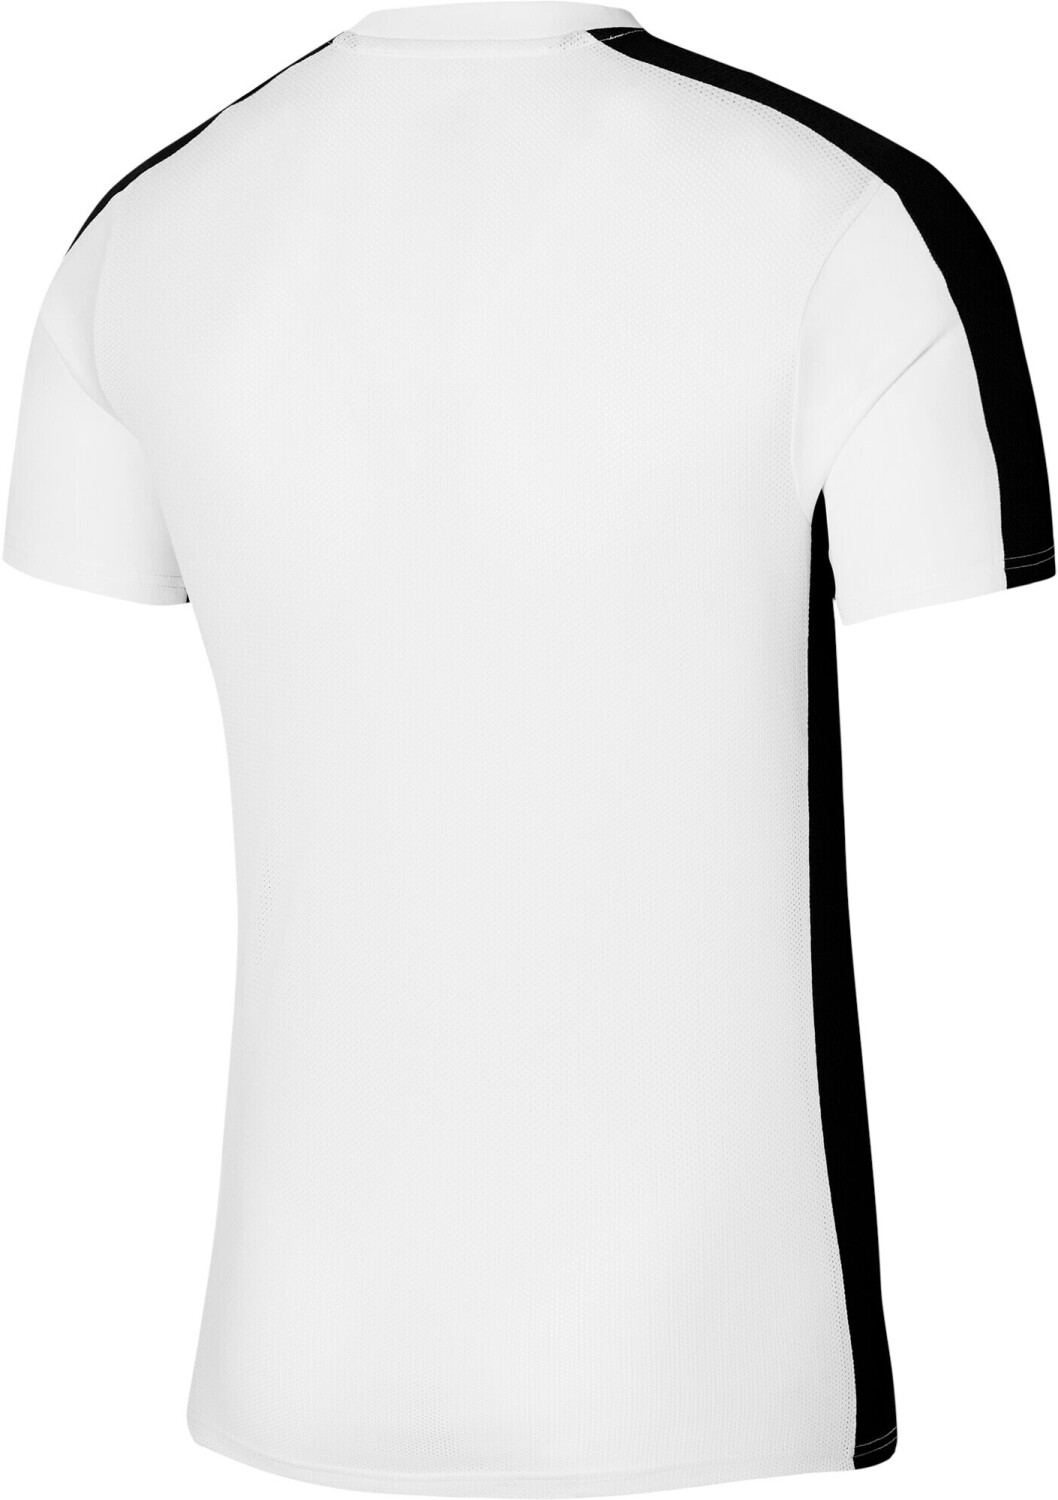 Nike Kinder Trainingsshirt Dri-FIT Academy € ab bei 8,64 Preisvergleich | Top white/black/black 23